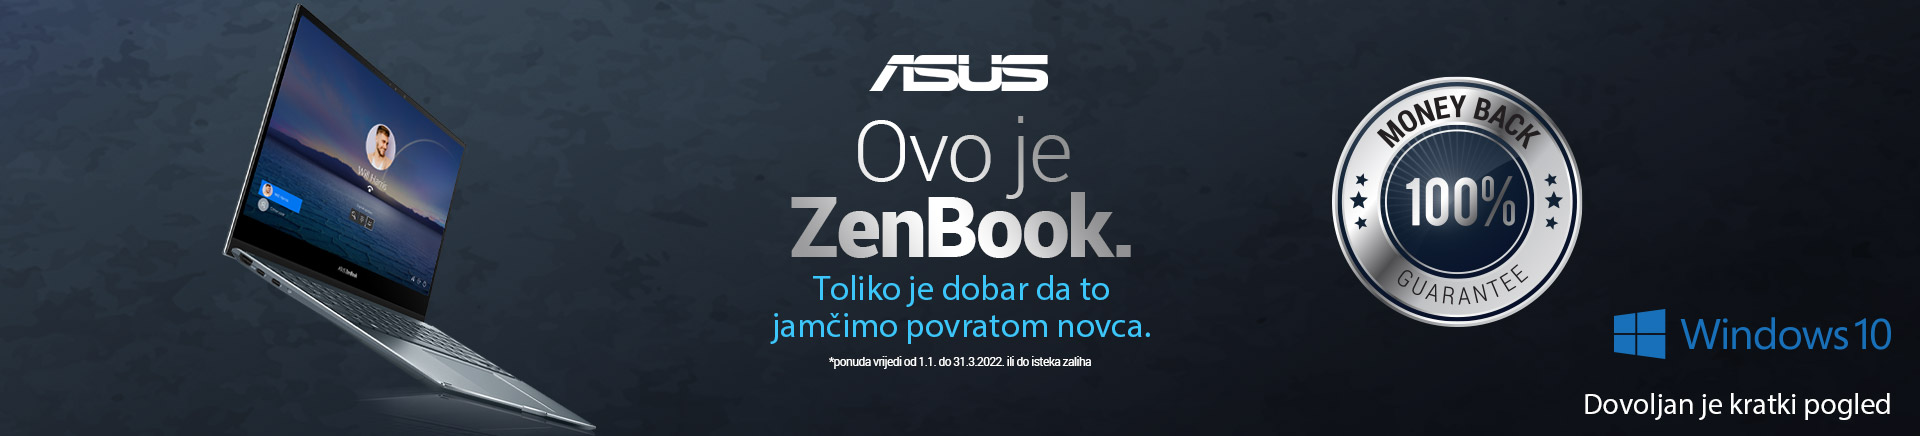 Asus ZenBook laptop